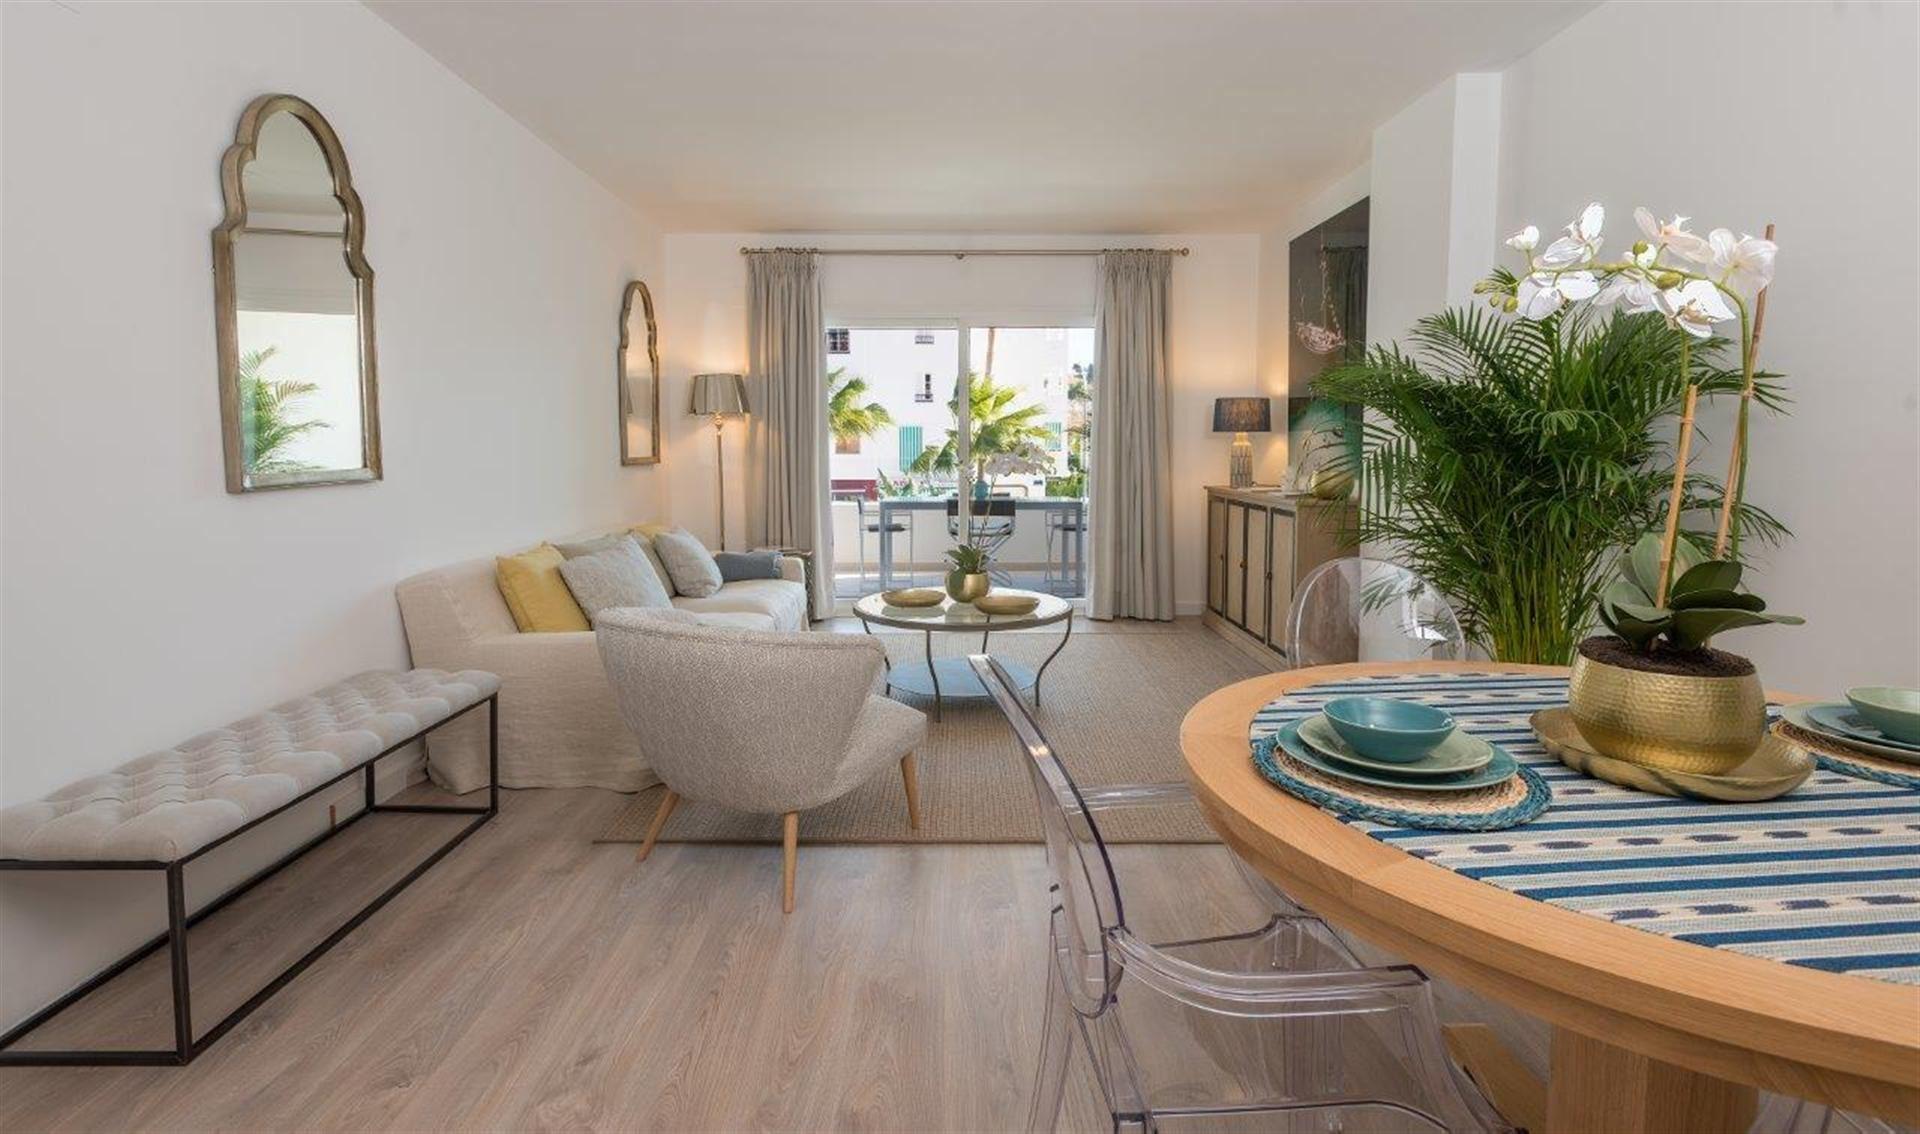 3 bedroom apartment / flat for sale in Marbella, Costa del Sol